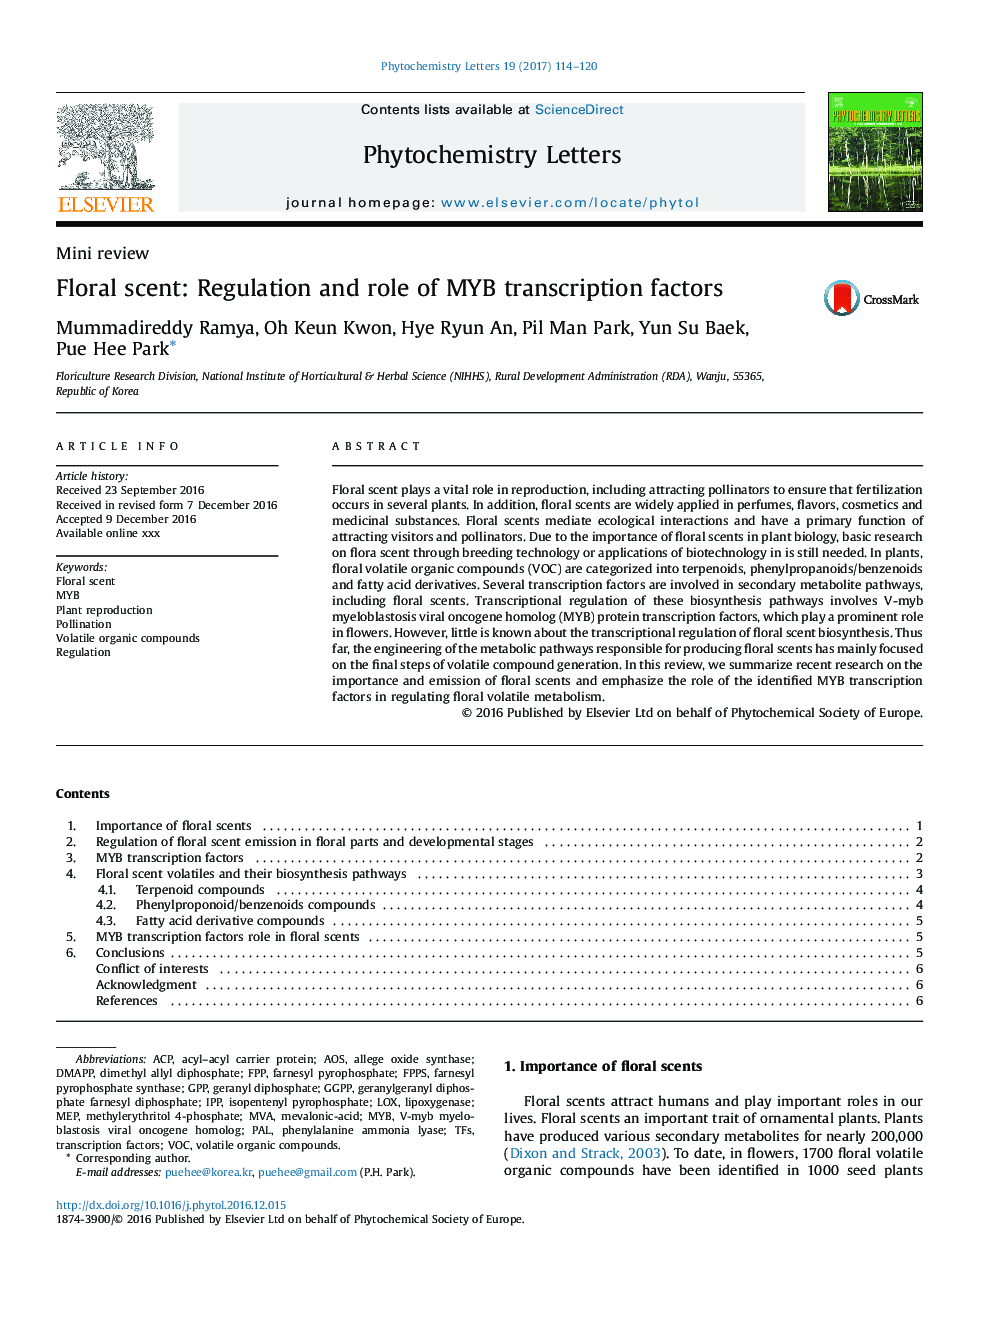 Floral scent: Regulation and role of MYB transcription factors